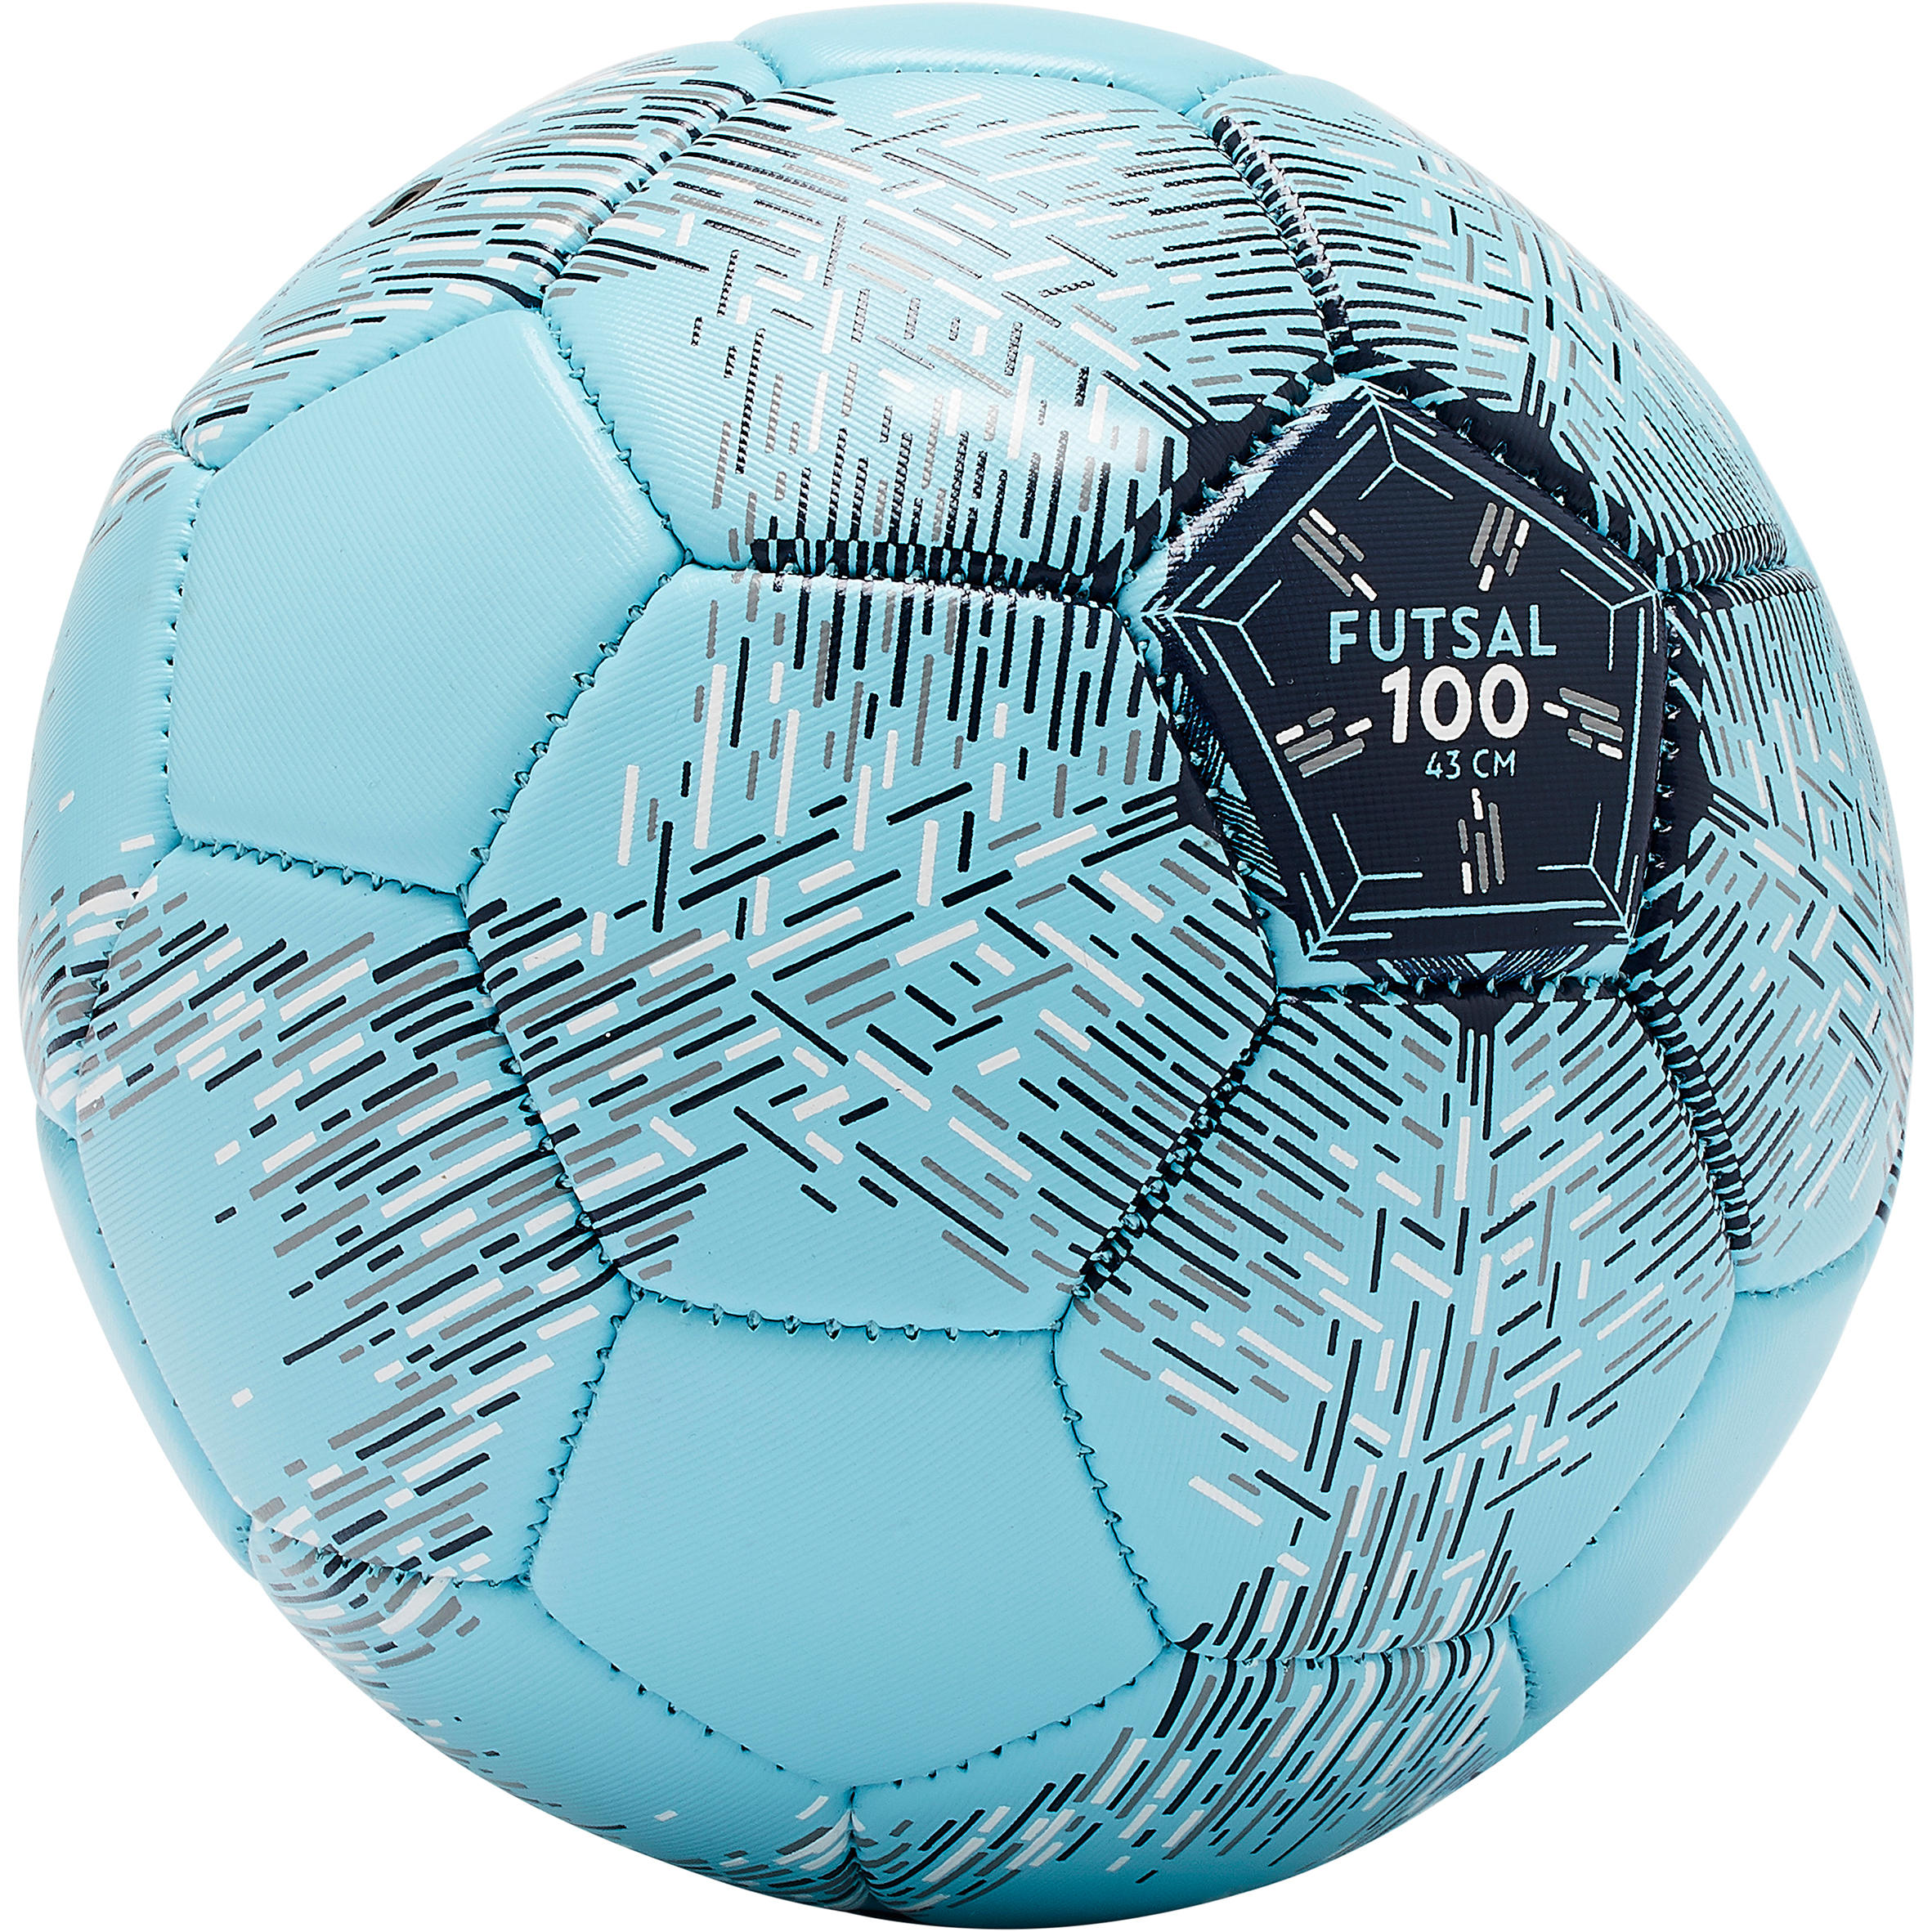 Futsal Ball FS100 - 43 cm (Size 1 